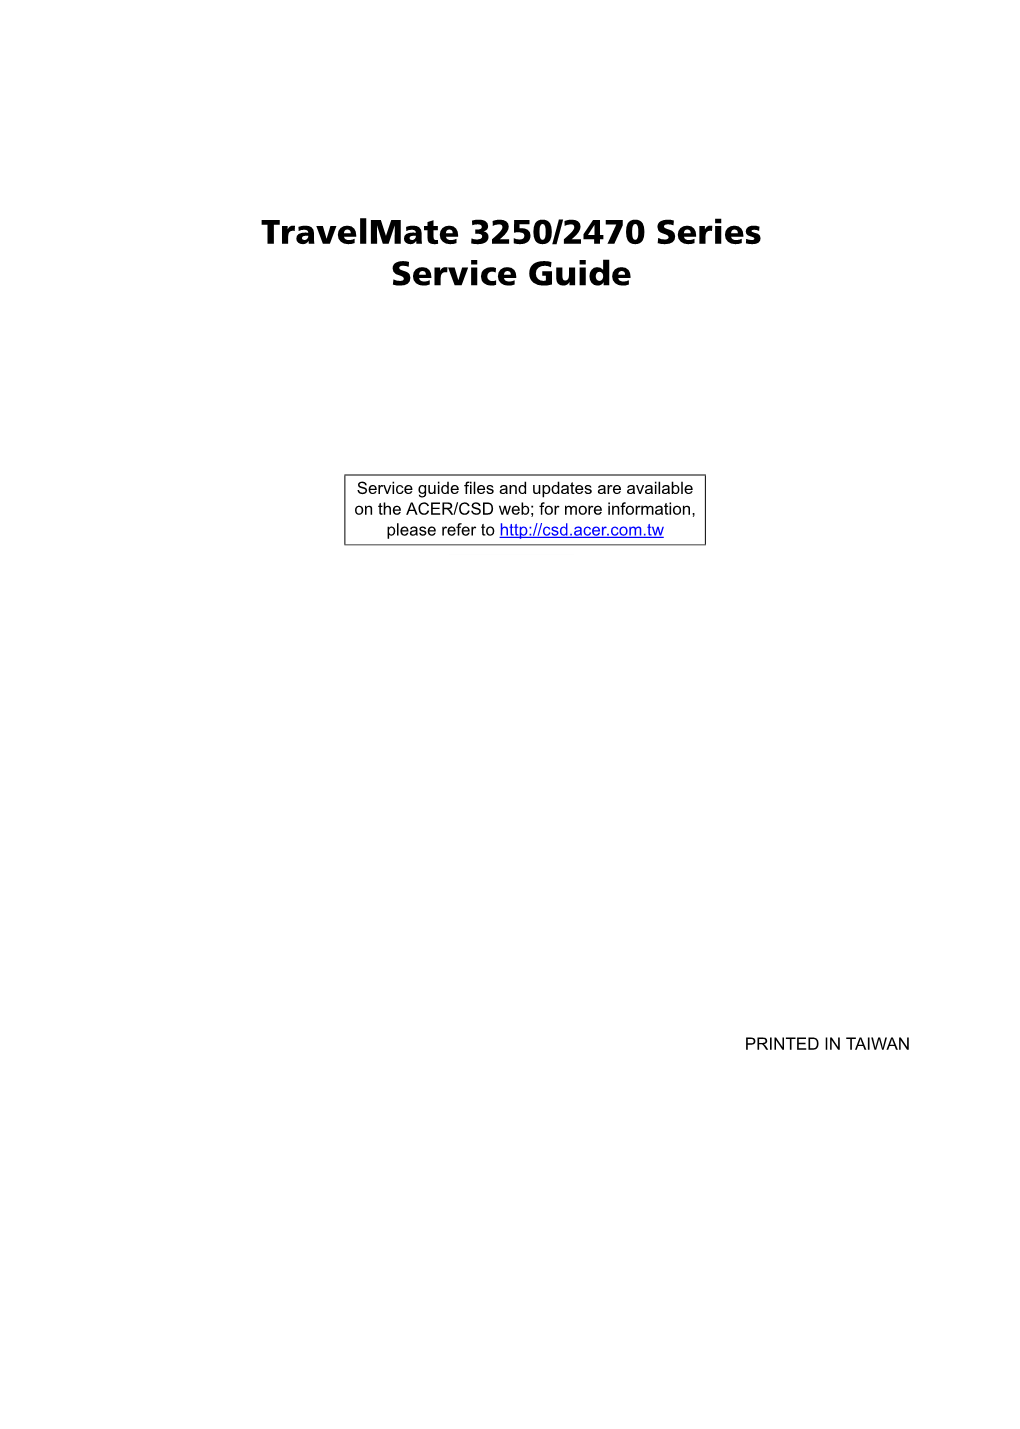 Travelmate 3250/2470 Series Service Guide